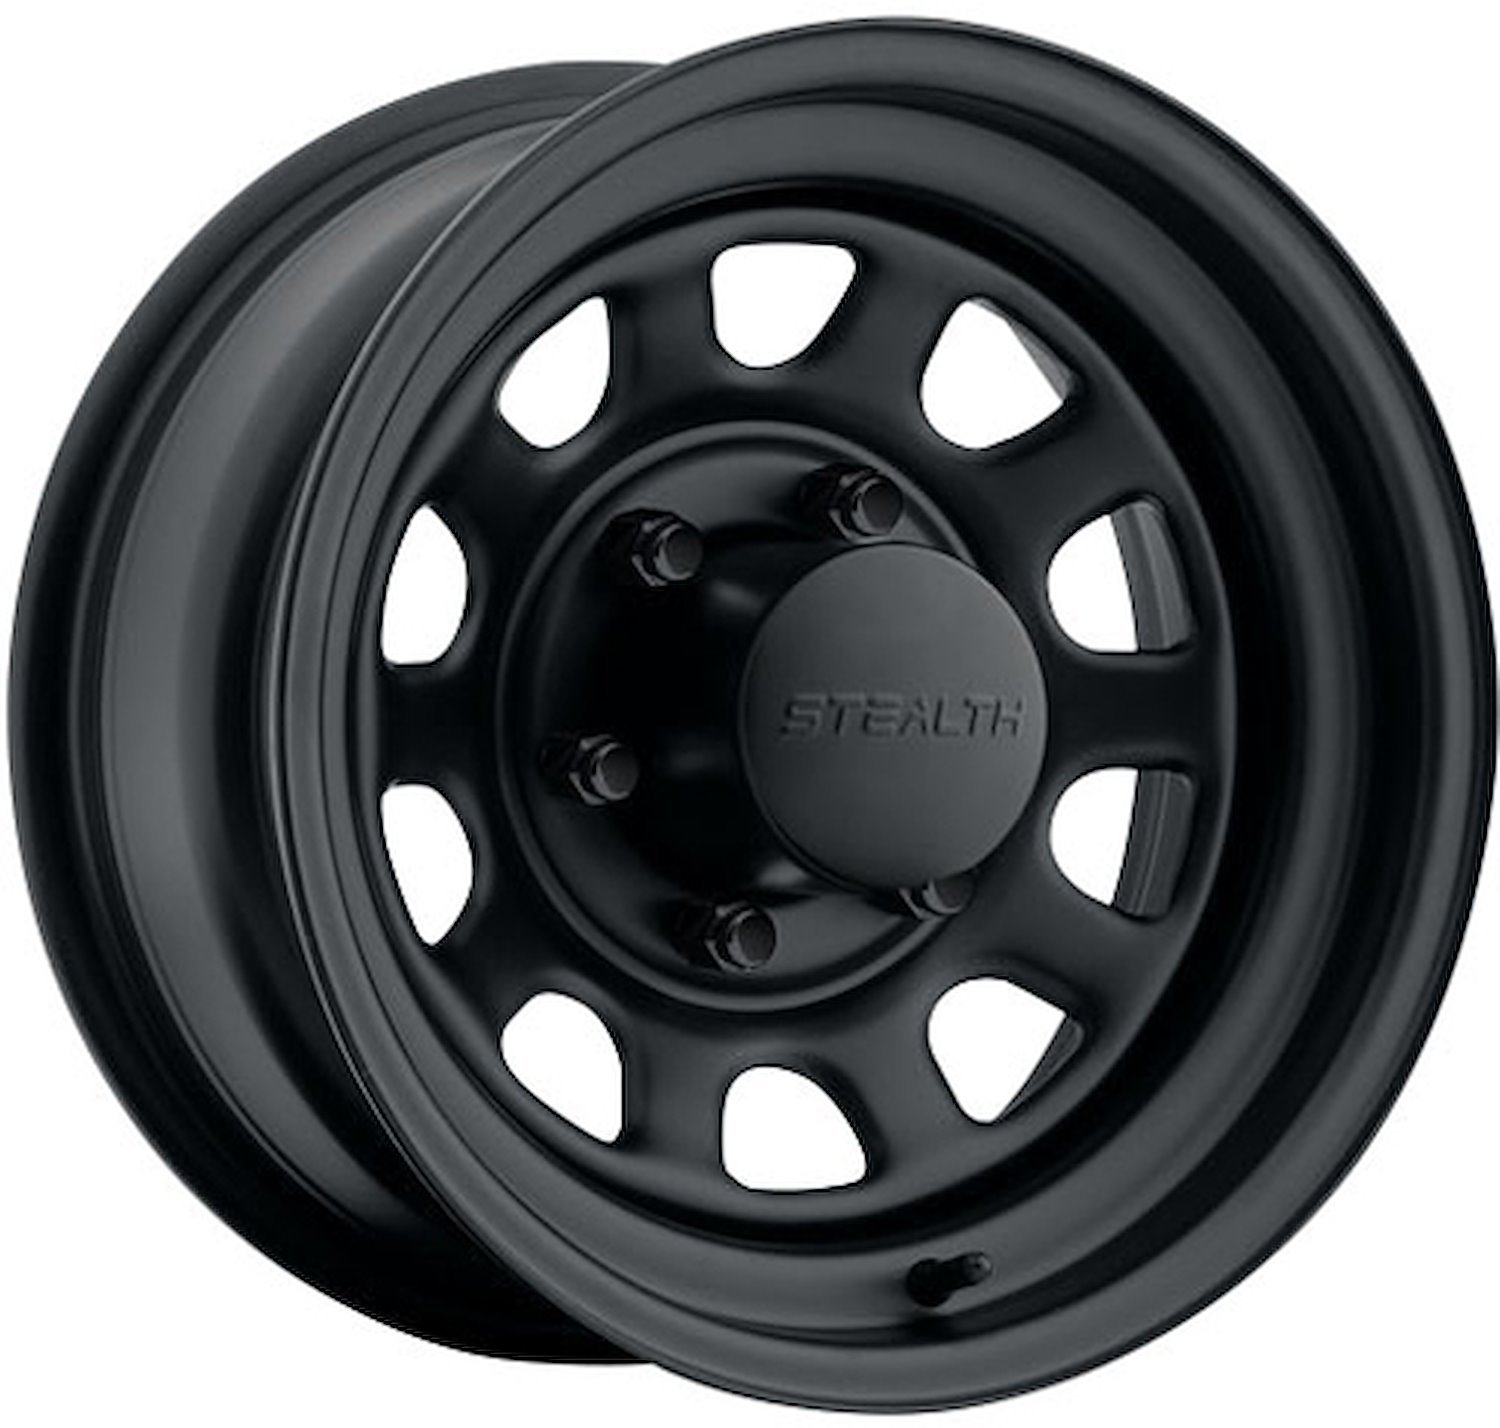 Stealth Black Daytona Wheel (Series 804) Size: 15" x 14"